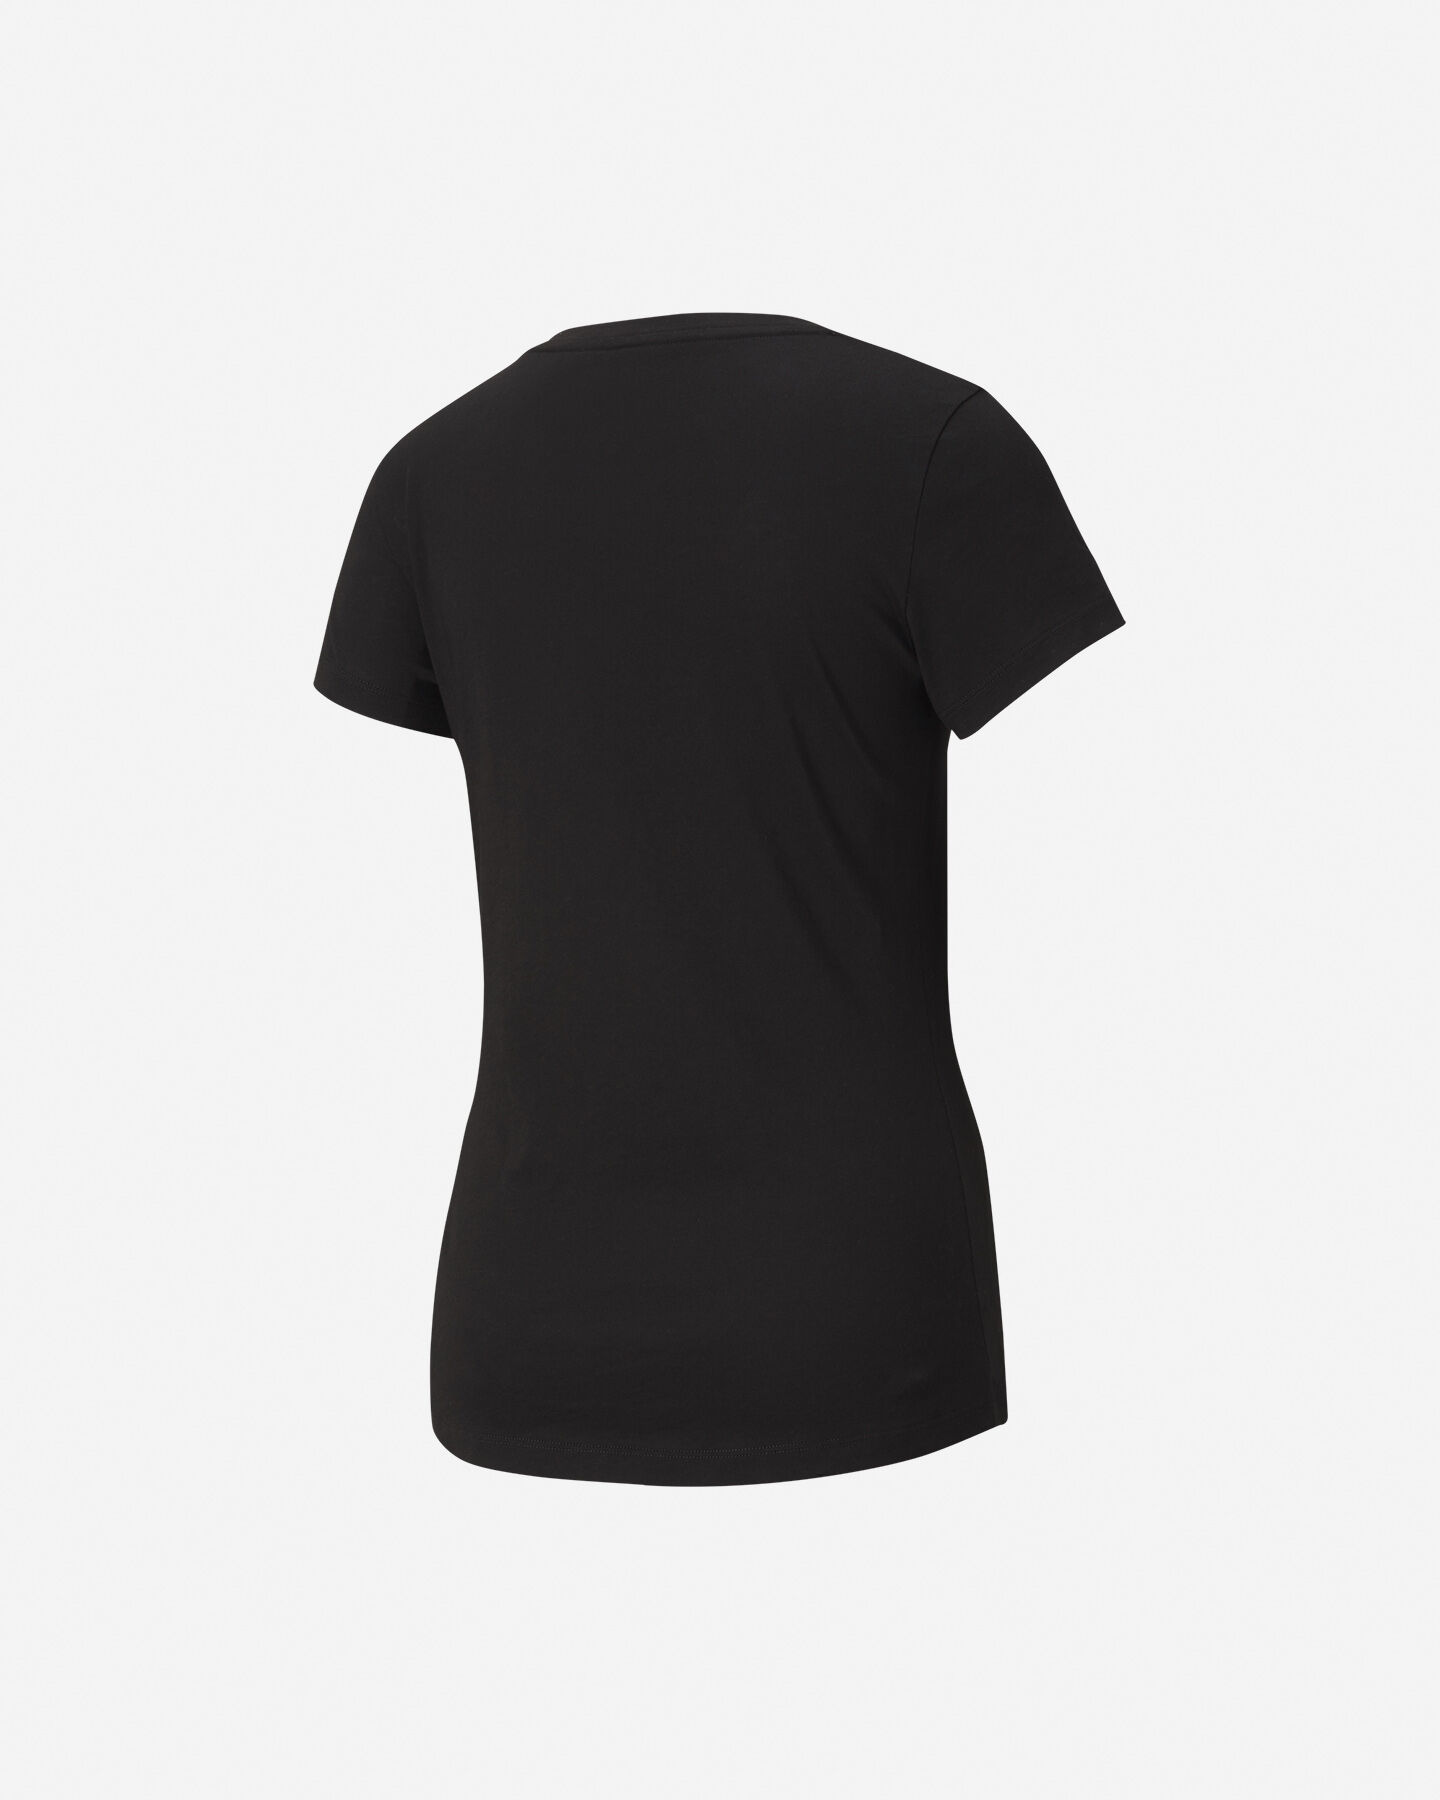  T-Shirt PUMA BIG LOGO W S5235257|01|XS scatto 1